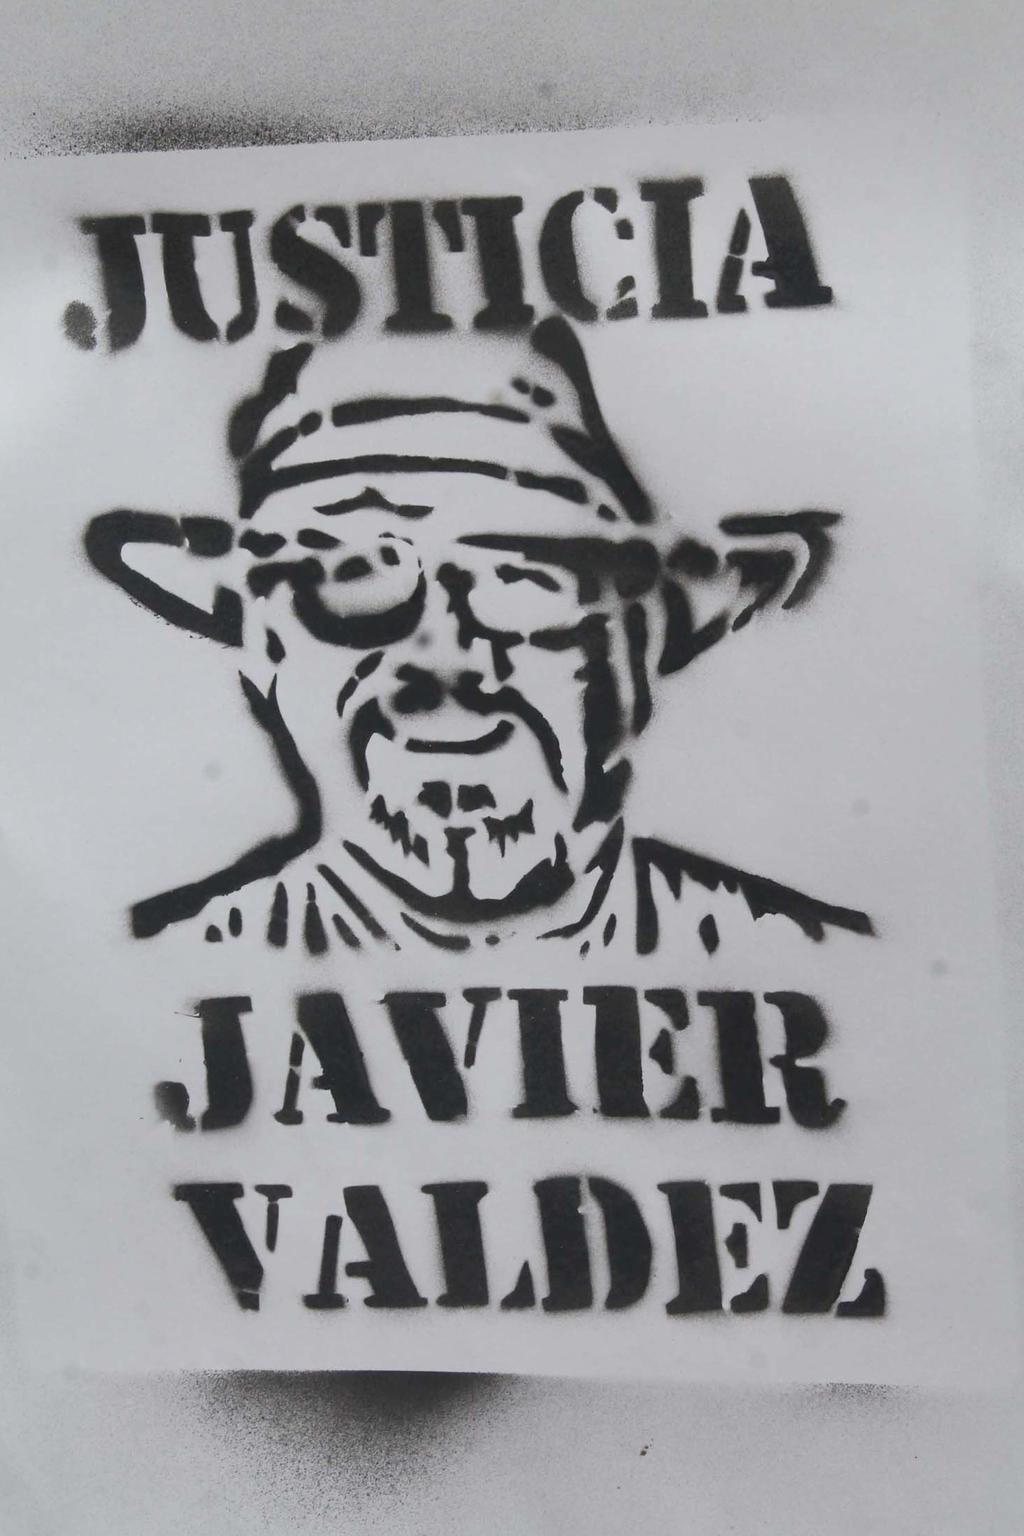 Colegas recordarán a Javier Valdez, periodista asesinado en 2017